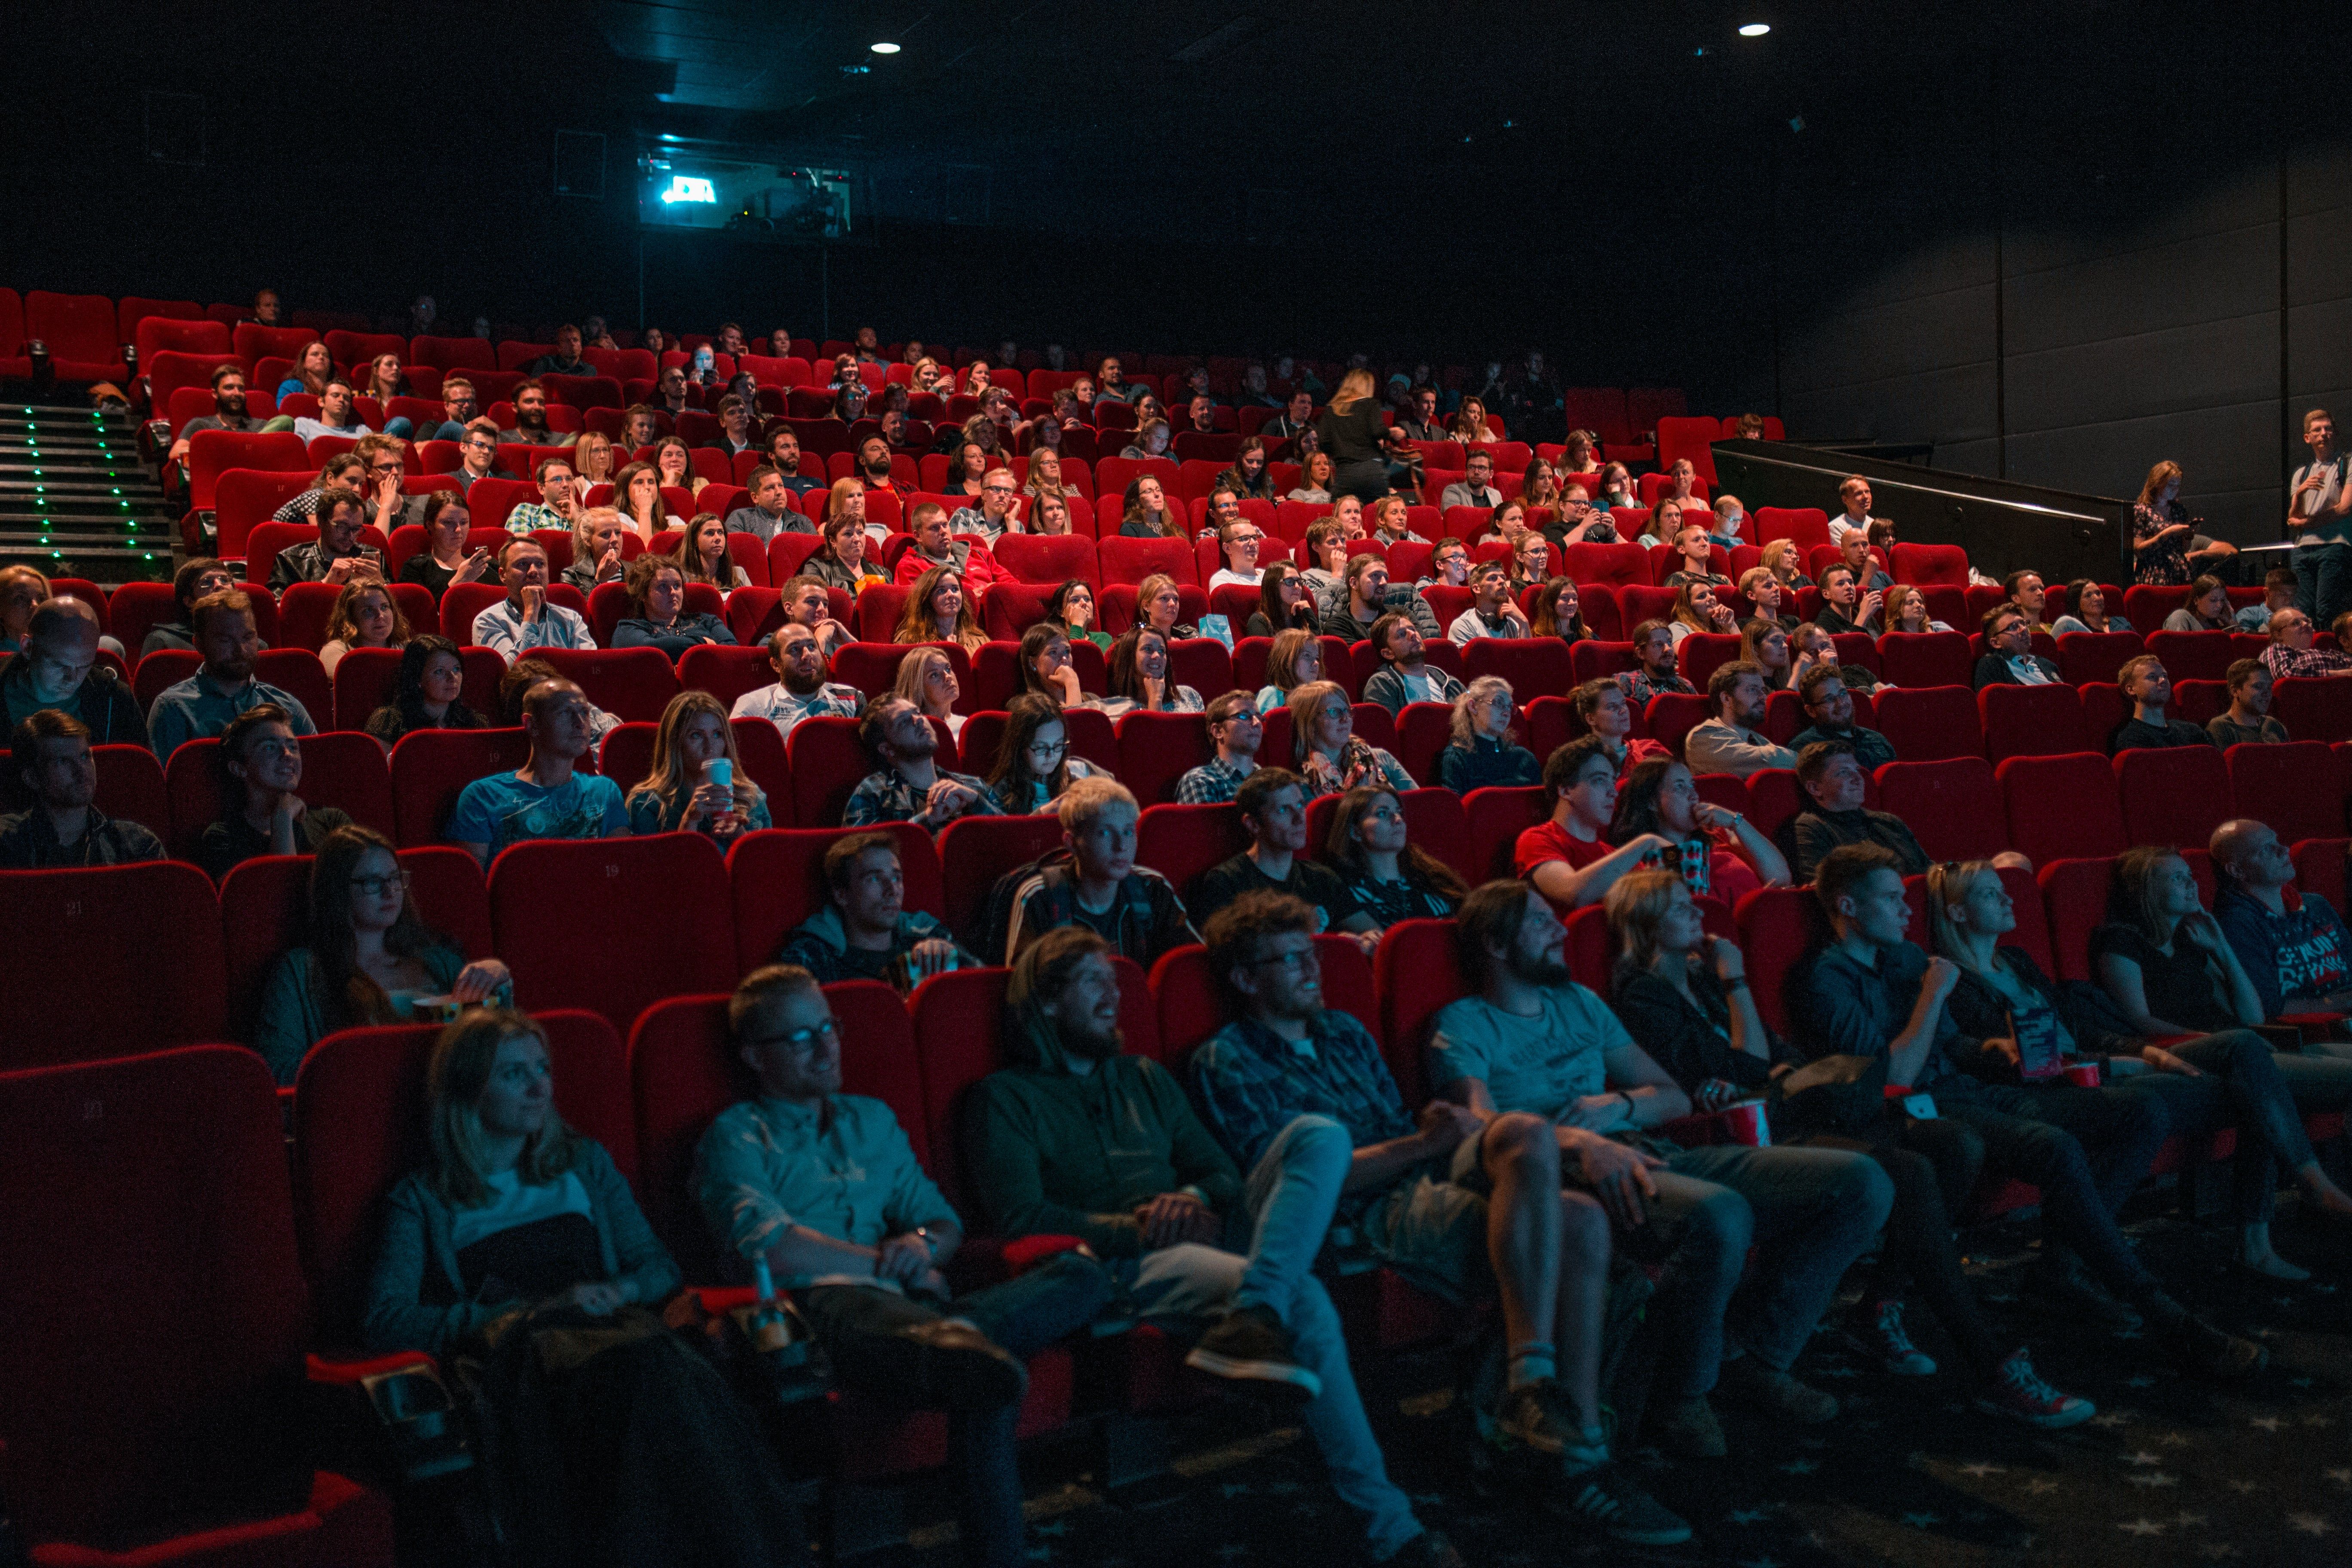 Espectadors en una sala de cinema